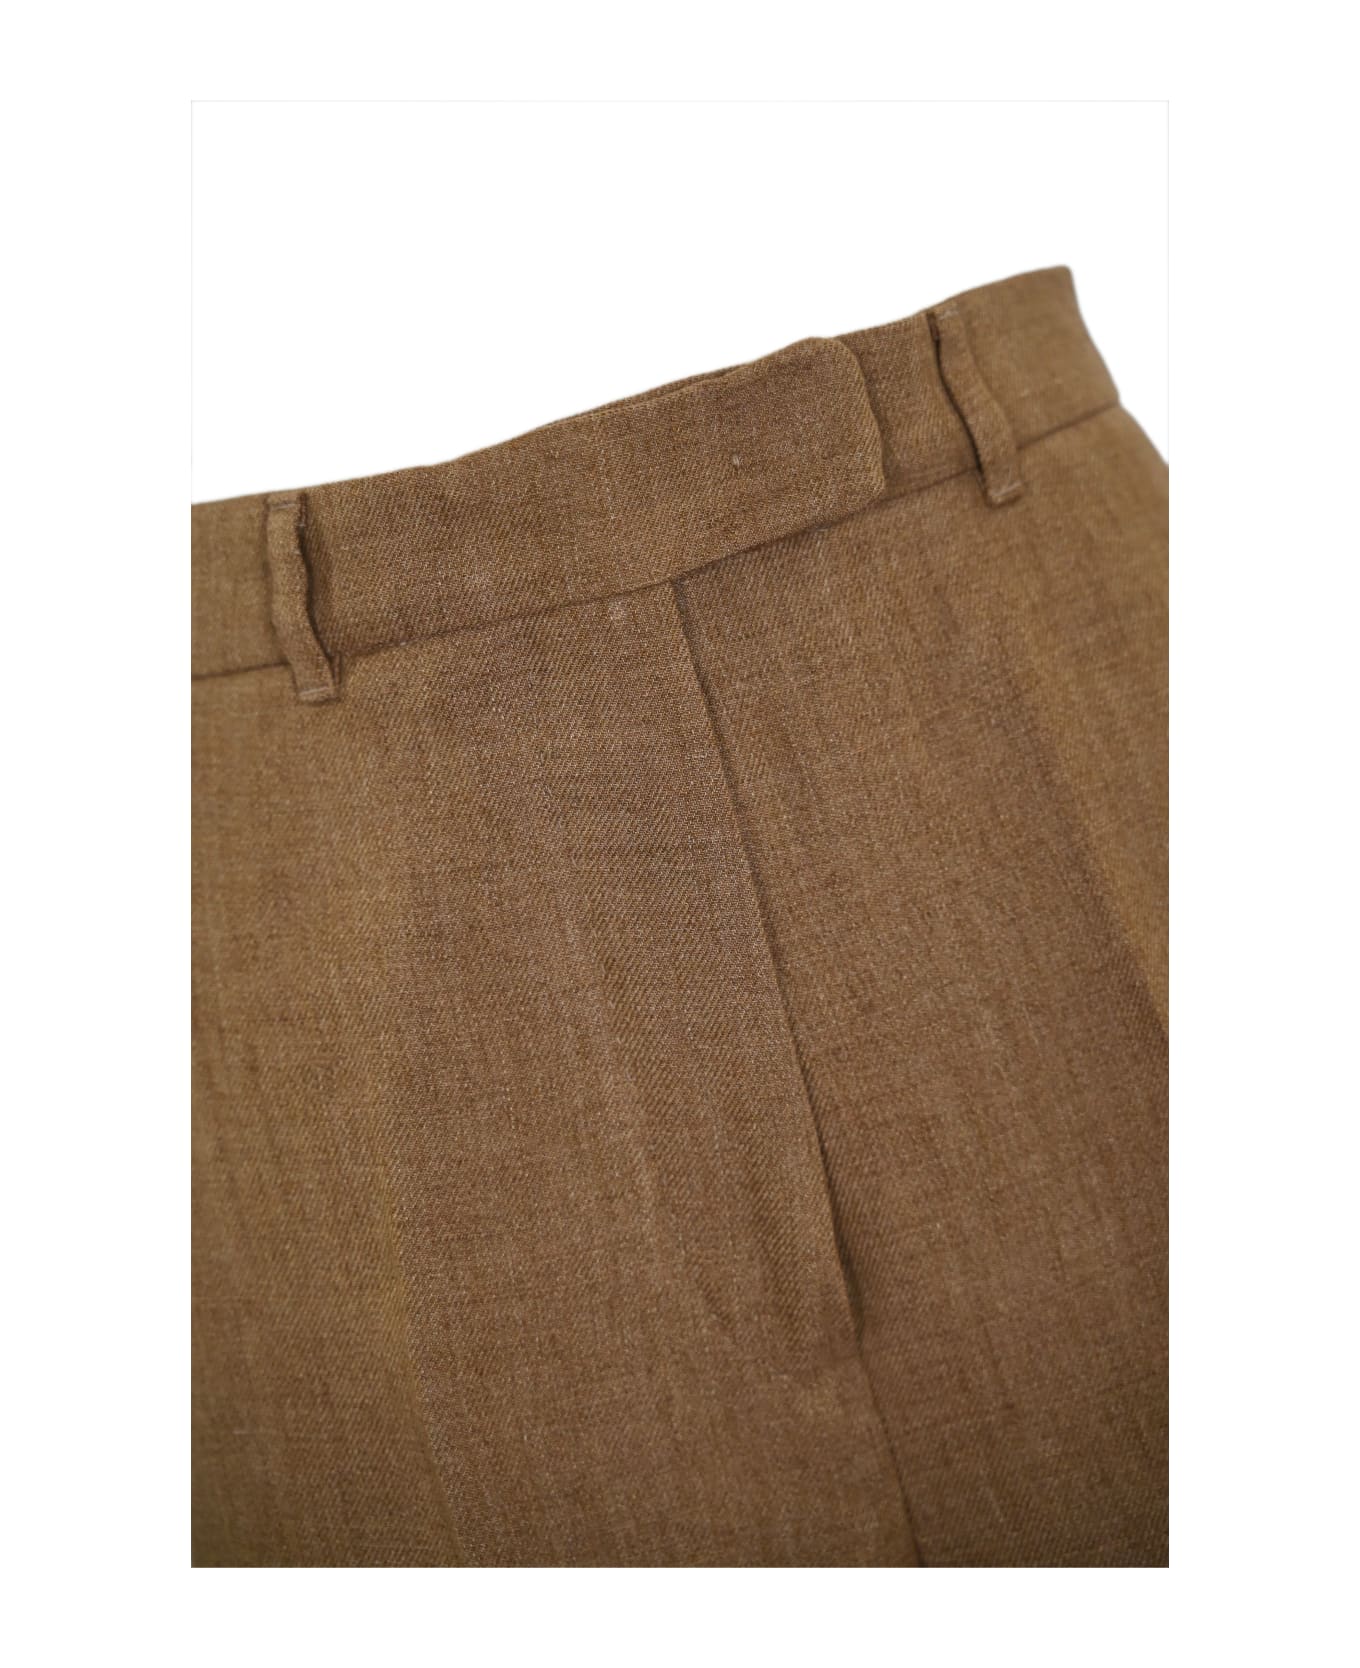 Max Mara Studio 'alcano' Linen Trousers - SIGARO ボトムス